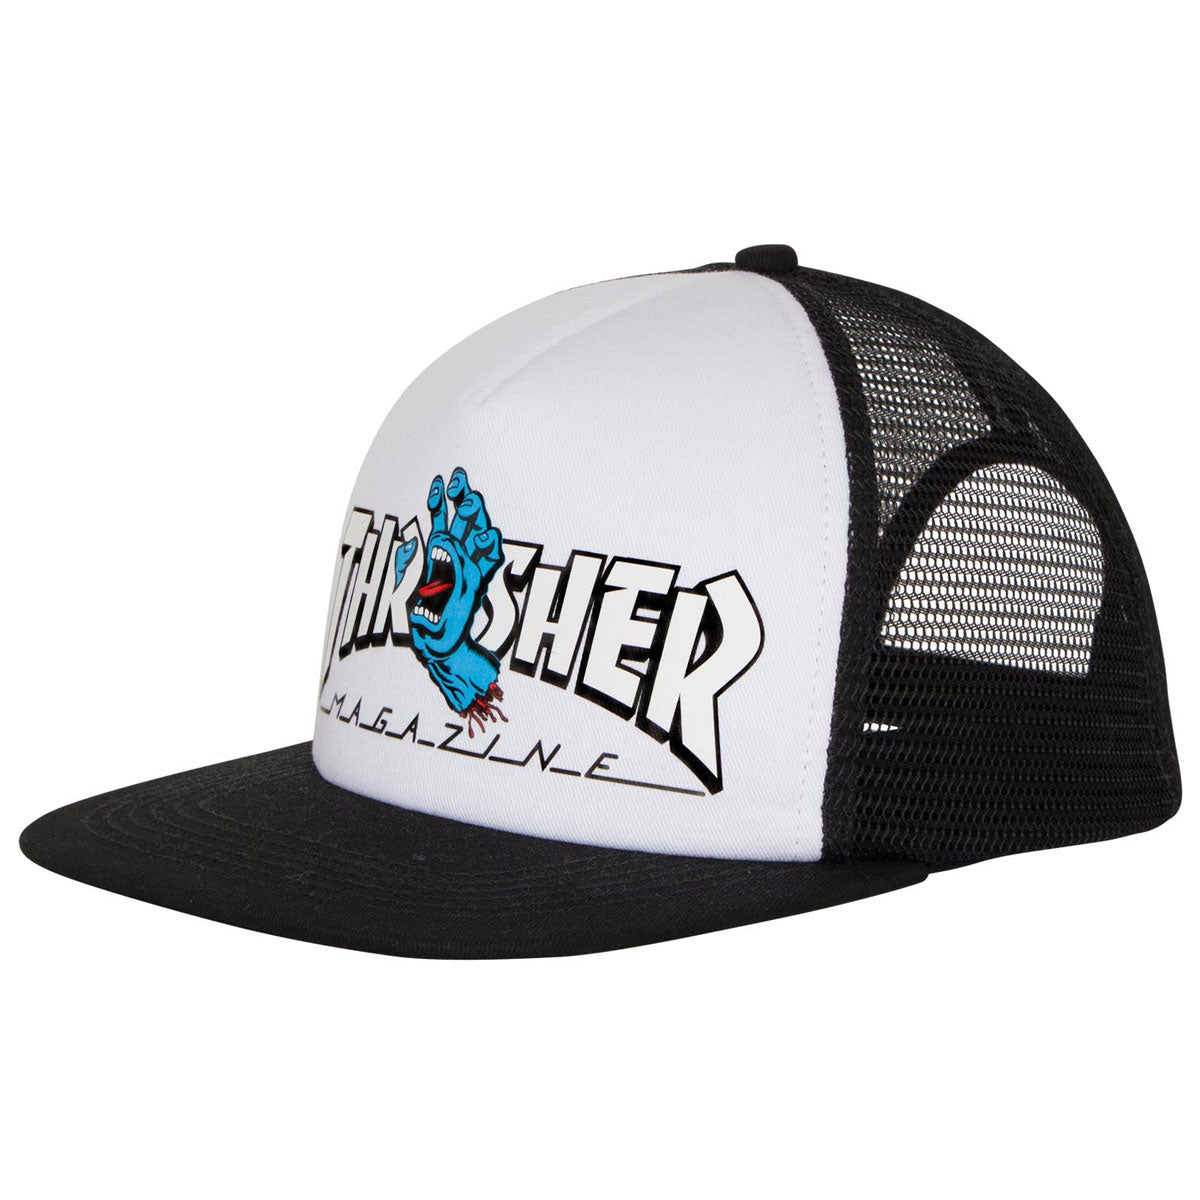 Santa Cruz x Thrasher Screaming Logo Mesh Trucker Hat - White/Black image 1